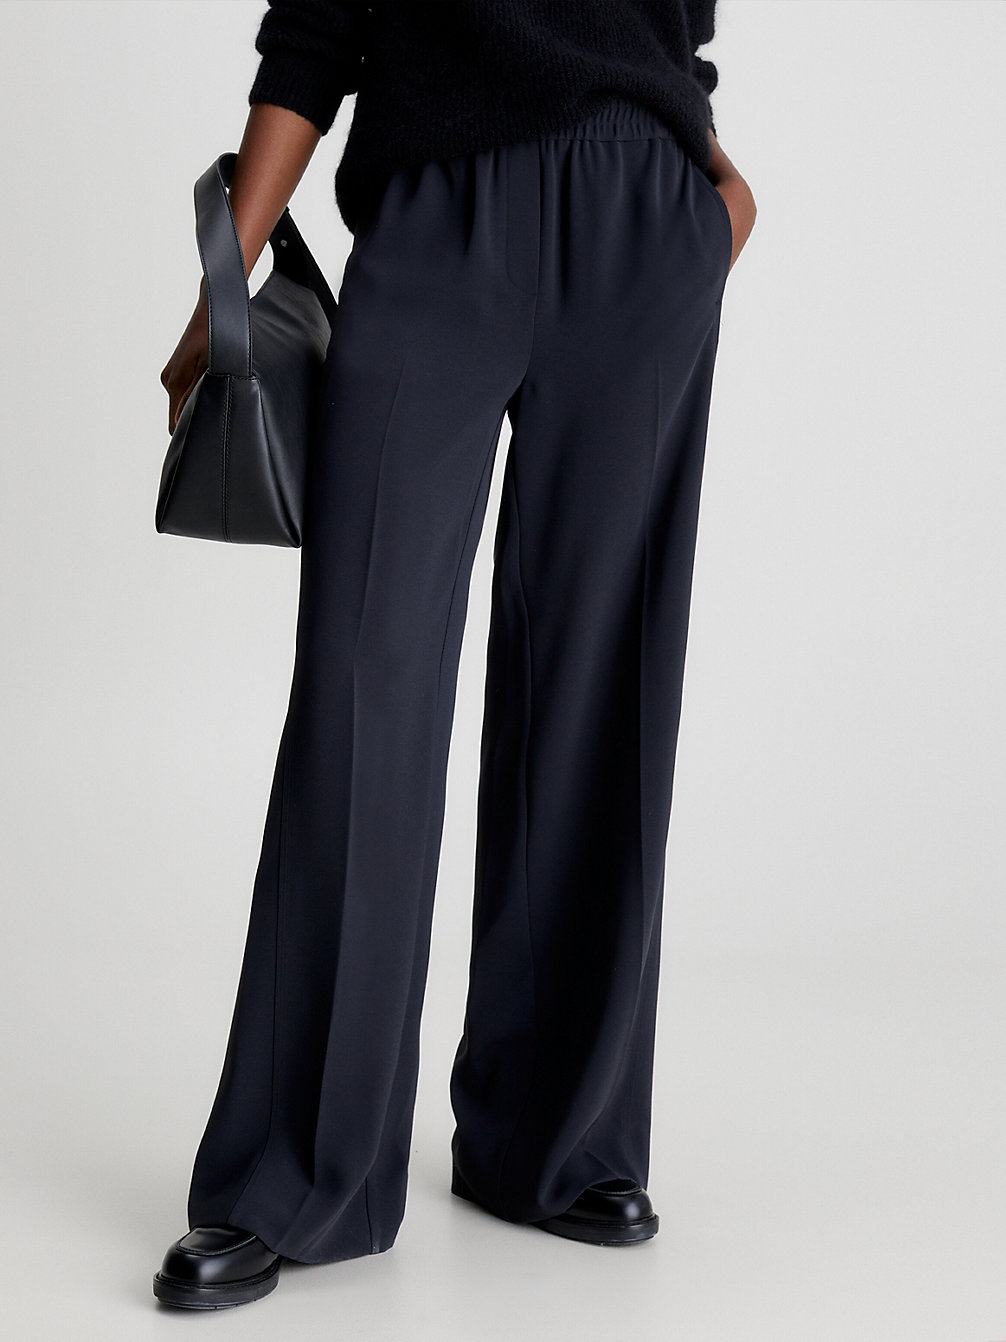 CK BLACK Twill Elastic Waist Trousers undefined women Calvin Klein